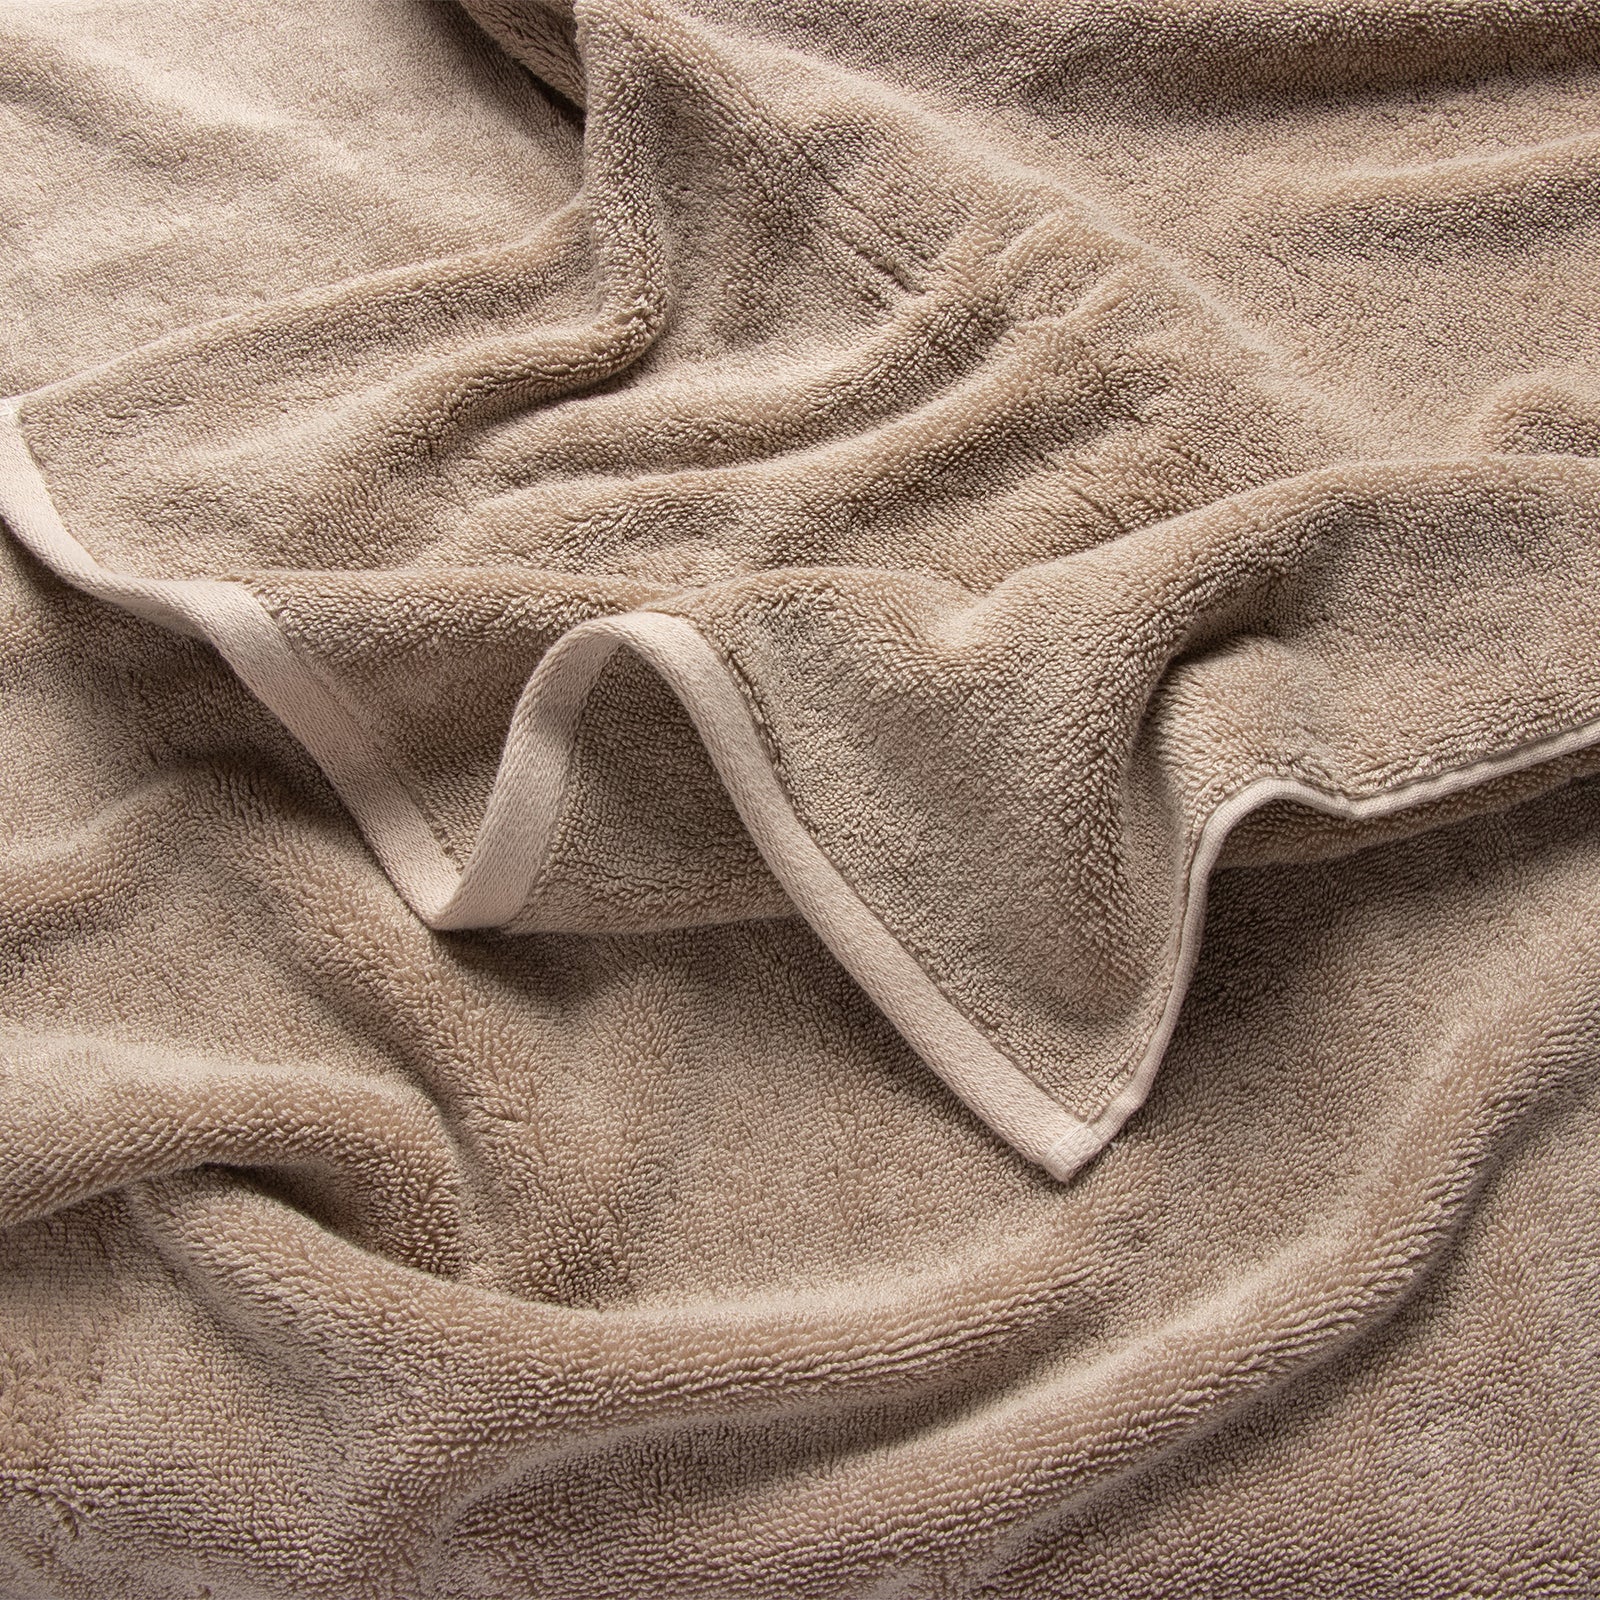 Premium Plush Bath Towel in the color Sand. Photo of Sand Premium Plush Bath Towel taken as a close up only showing the Premium Plush Bath Towel's texture 